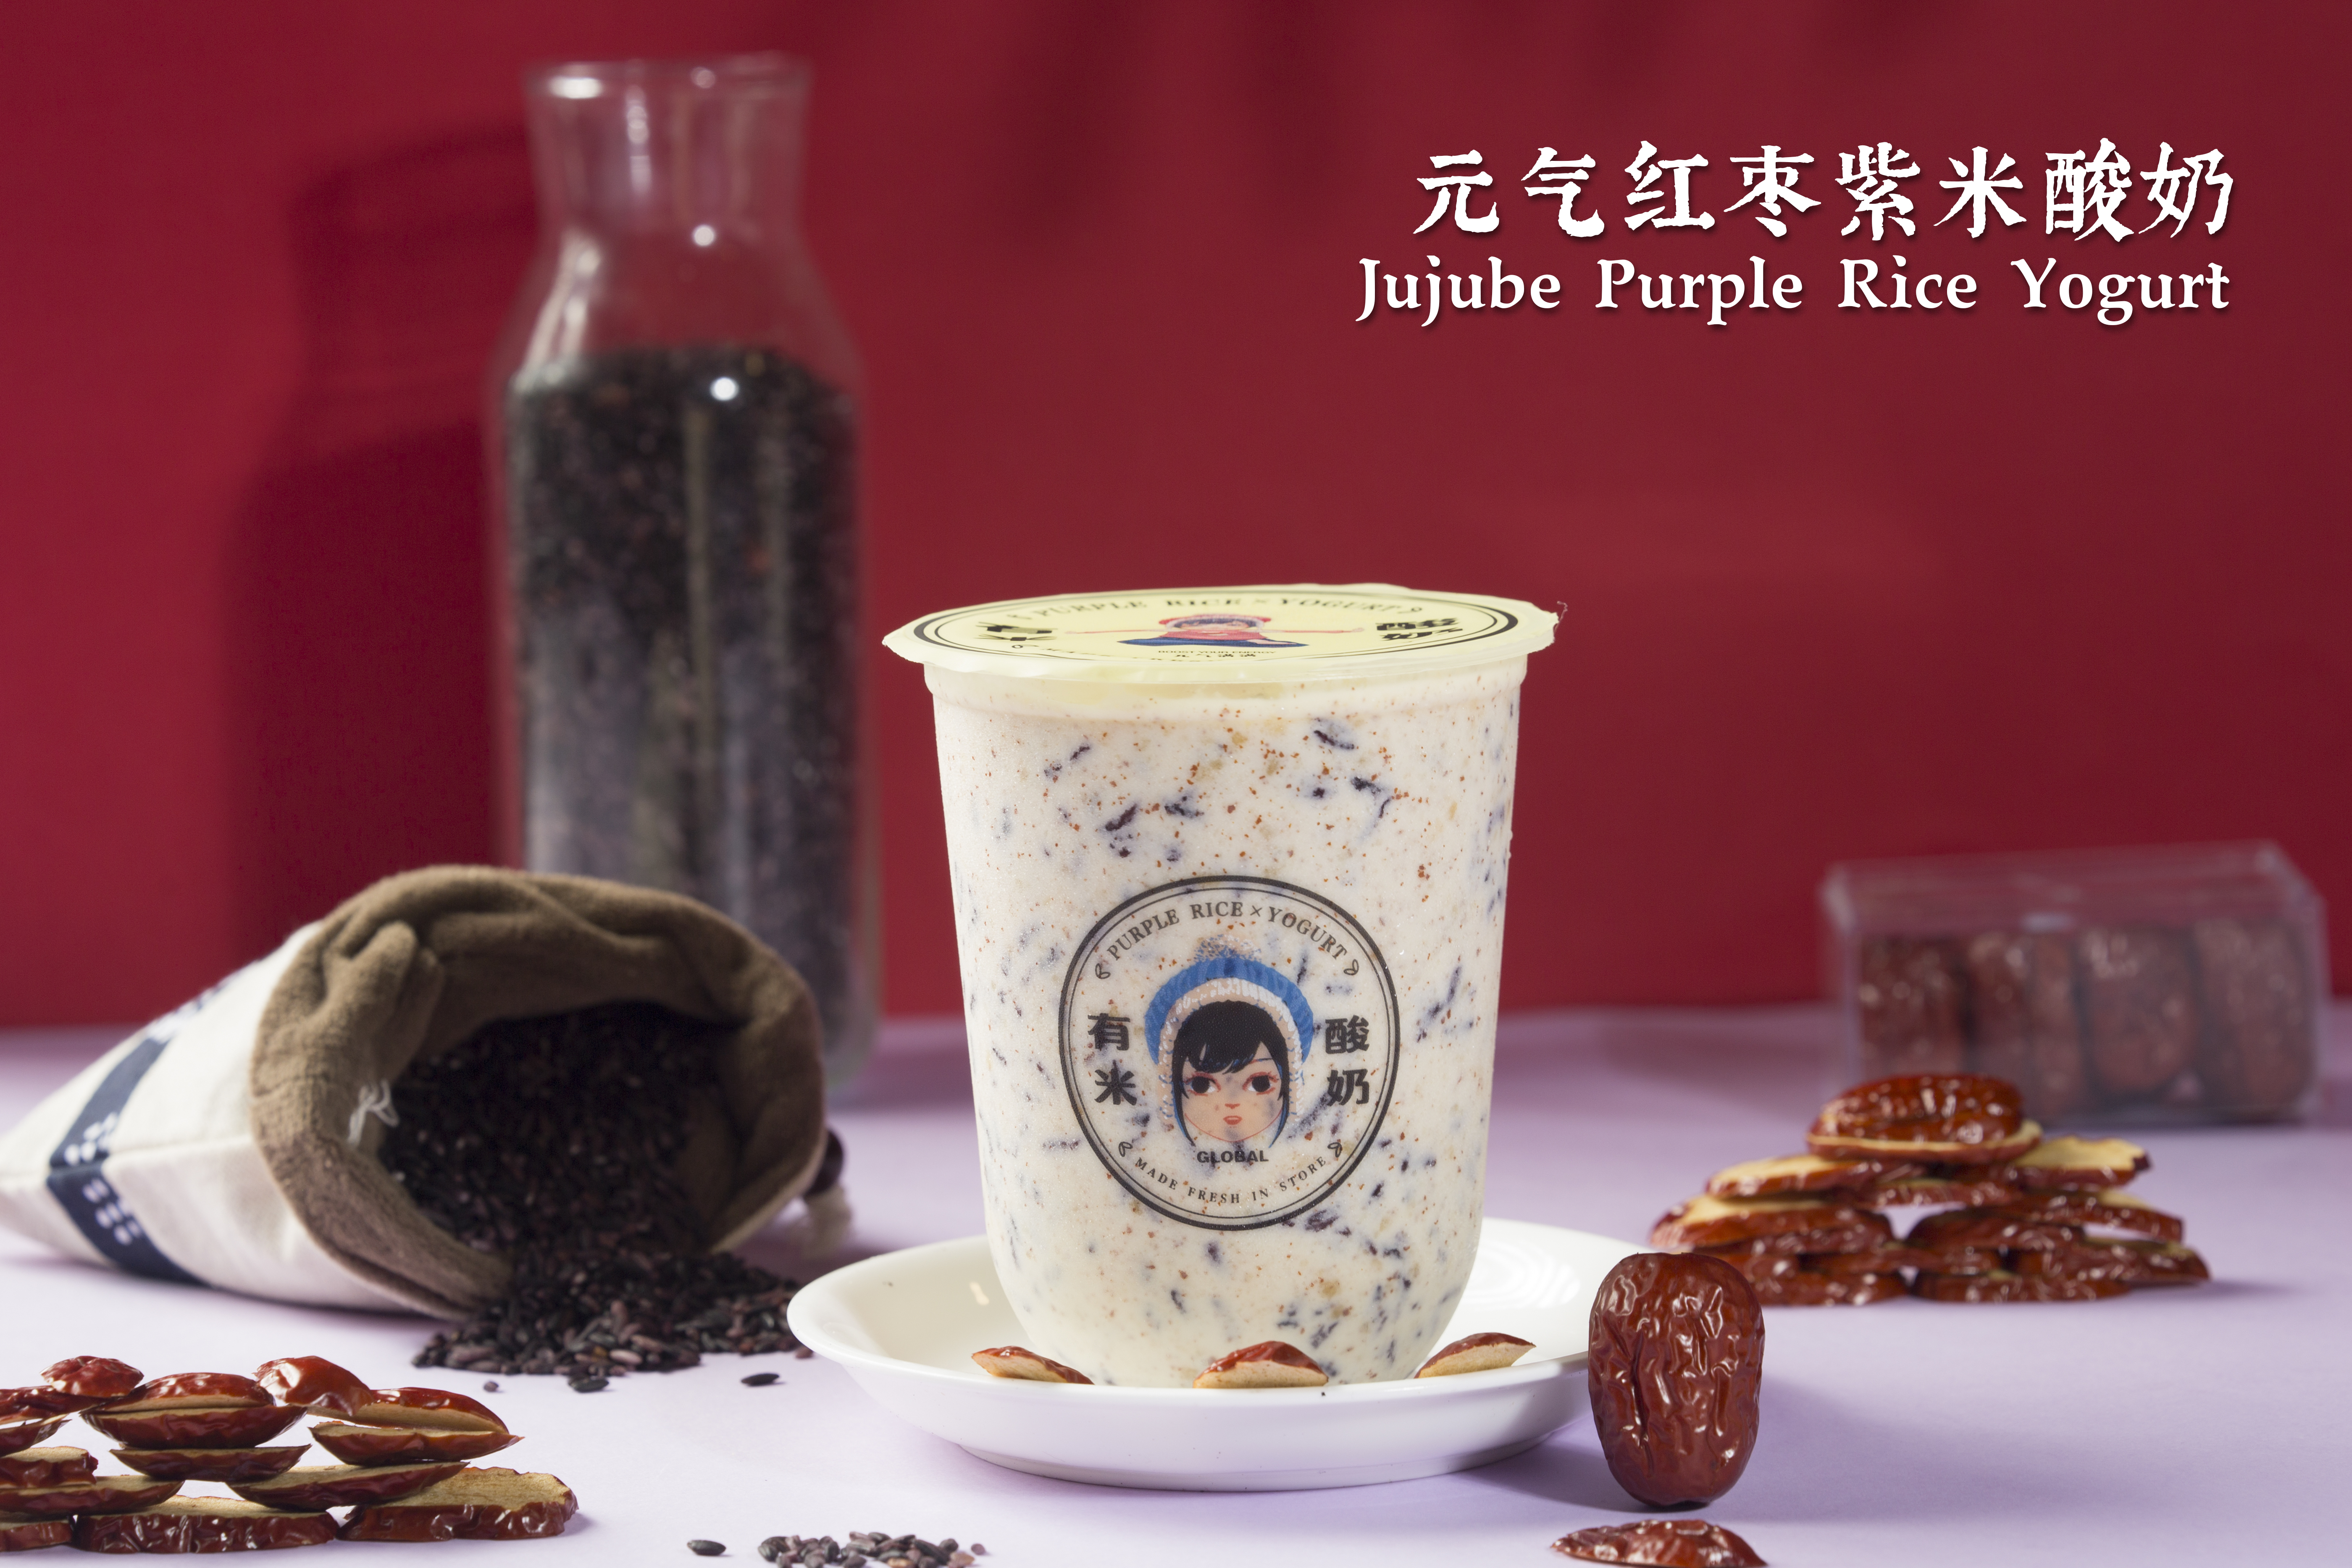 Yomie's Purple Rice Yogurt